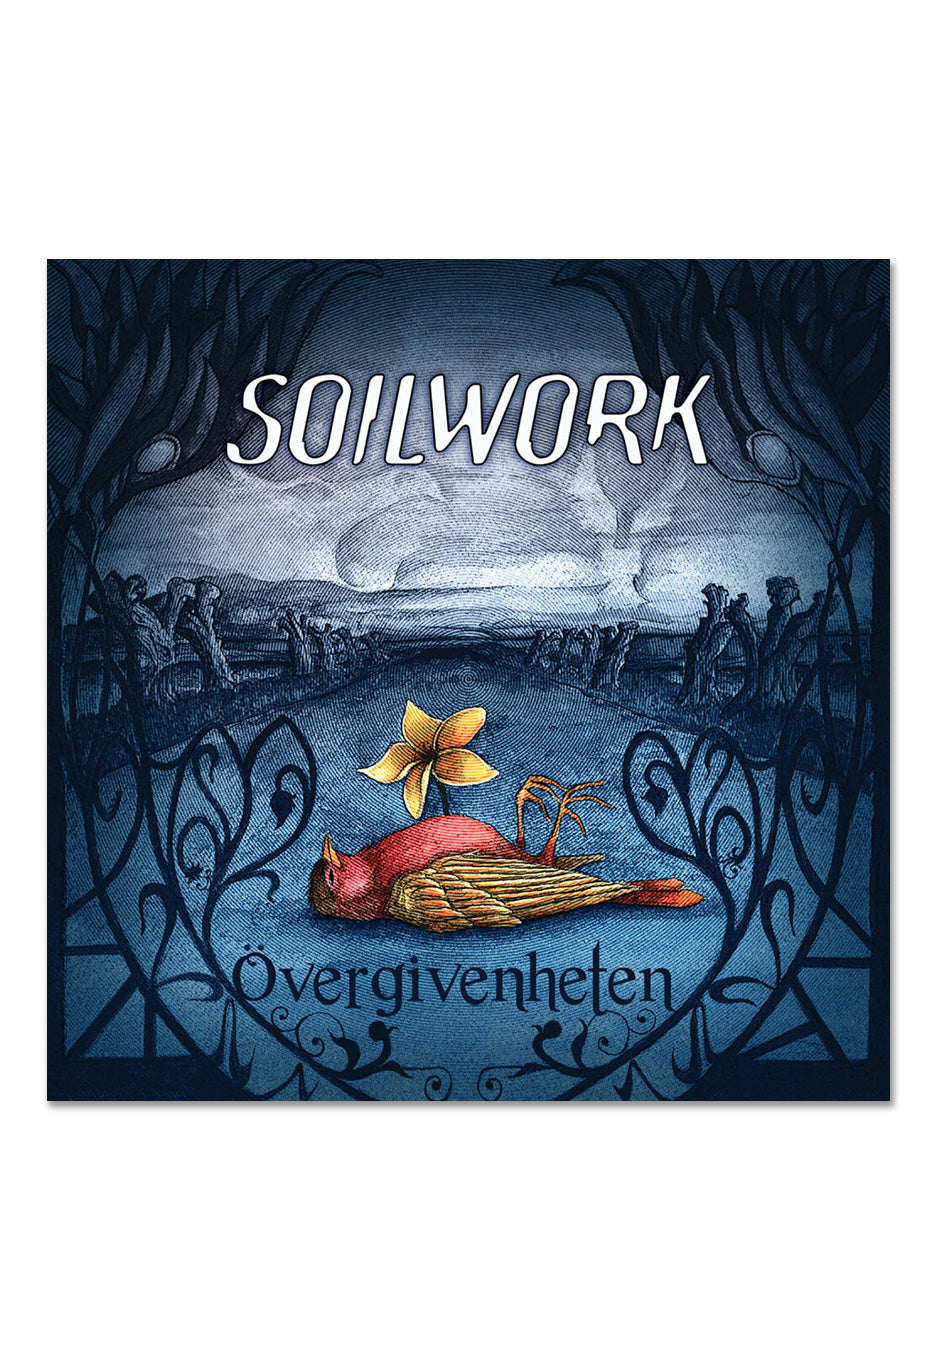 Soilwork - Övergivenheten Ltd. Transparent Blue - Colored 2 Vinyl